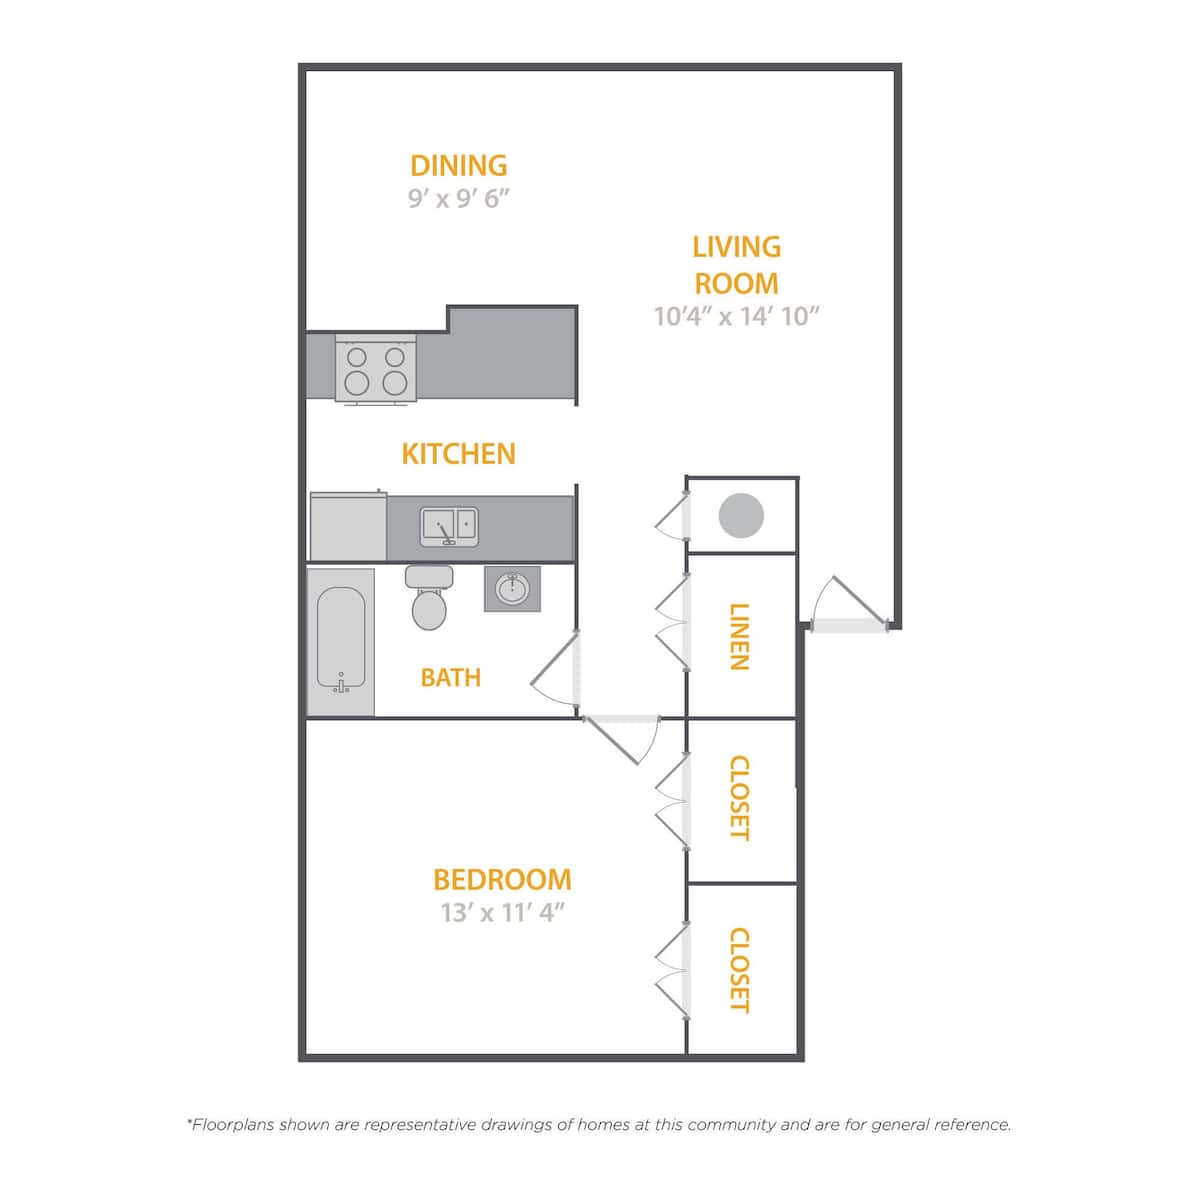 Floorplan diagram for Tidal, showing 1 bedroom